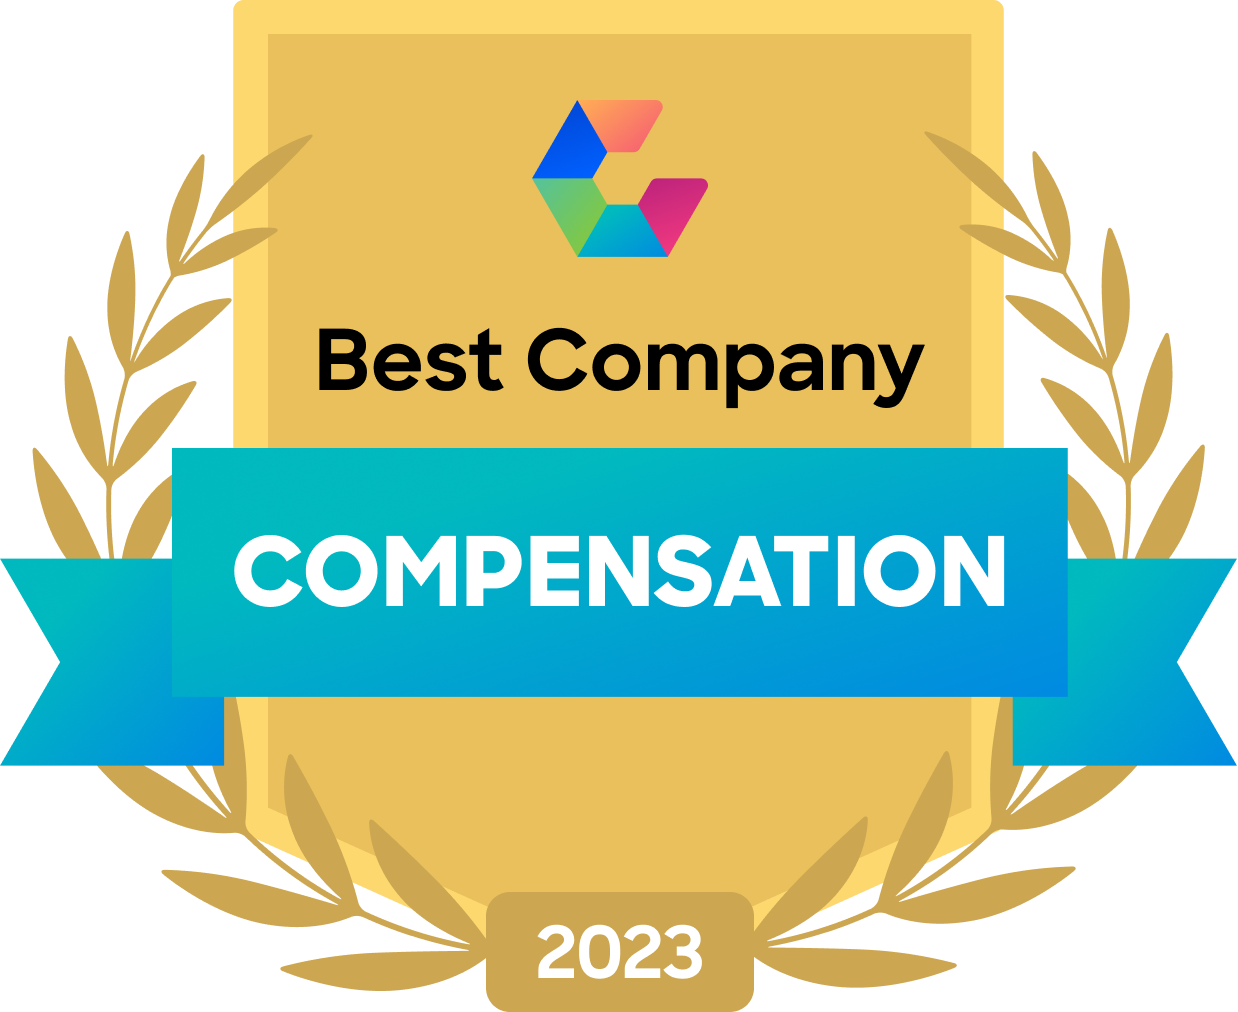 Best Company Compensation 2023